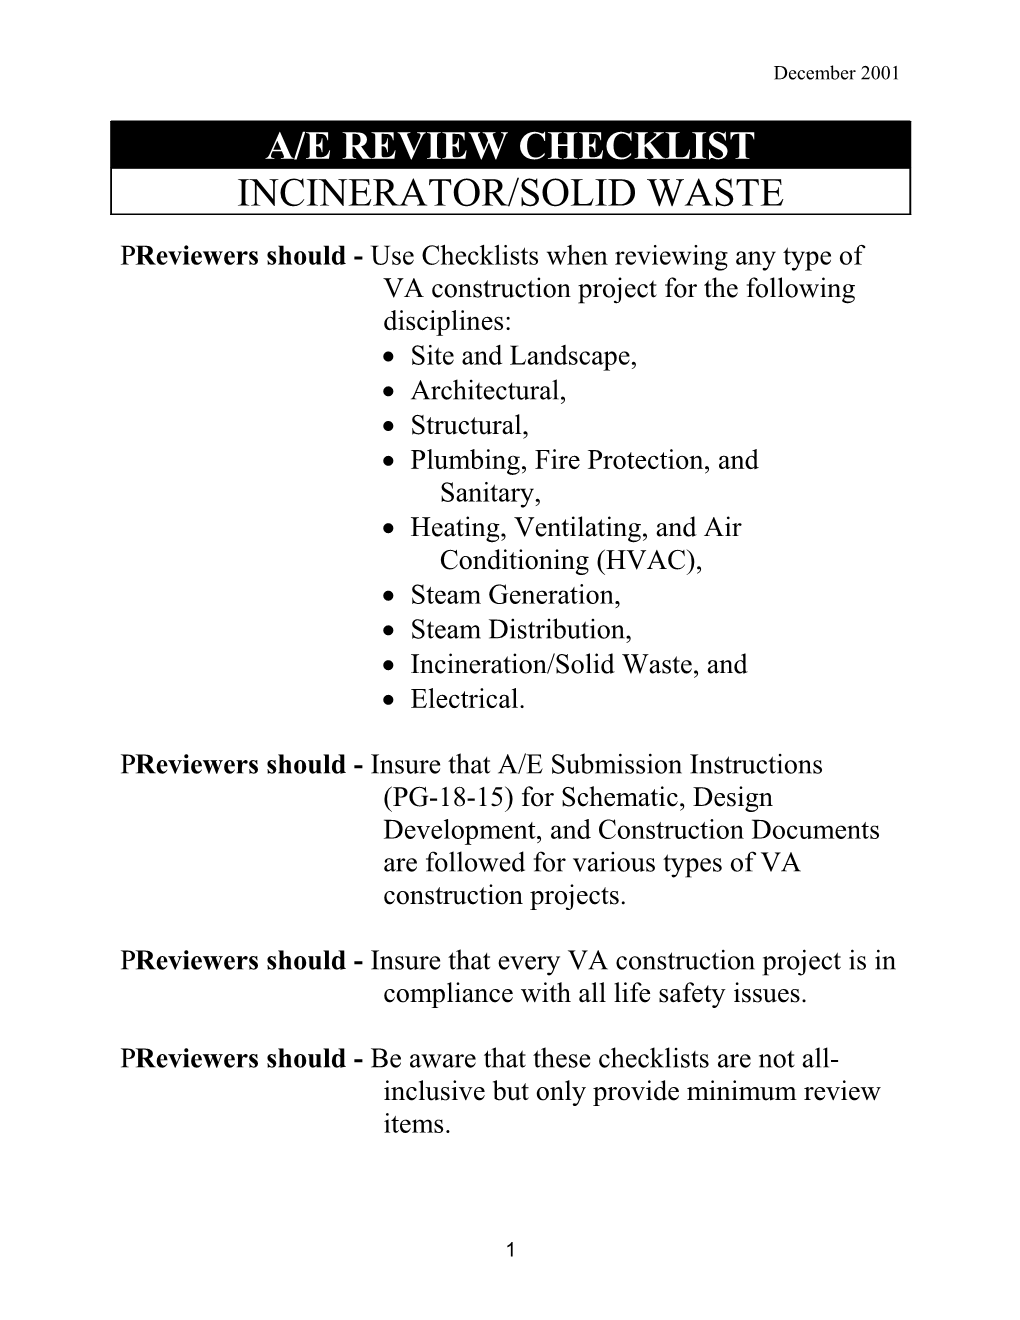 A/E Review Checklist - Incinerator/Solid Waste